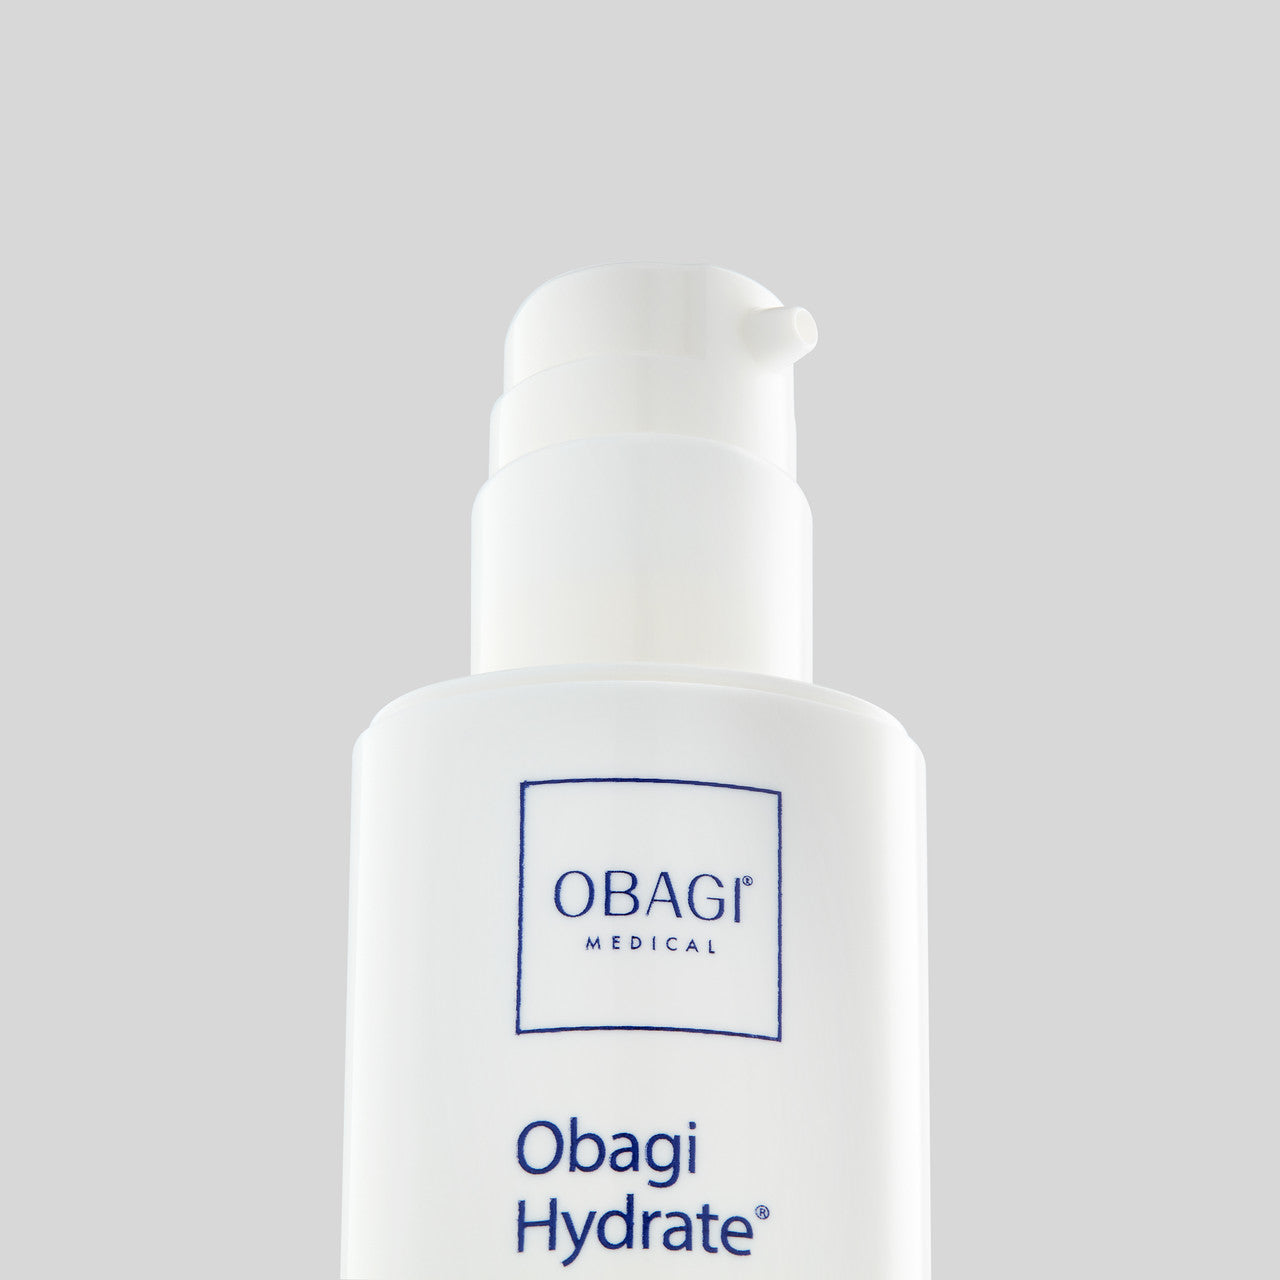 Obagi Hydrate Facial Moisturizer close up